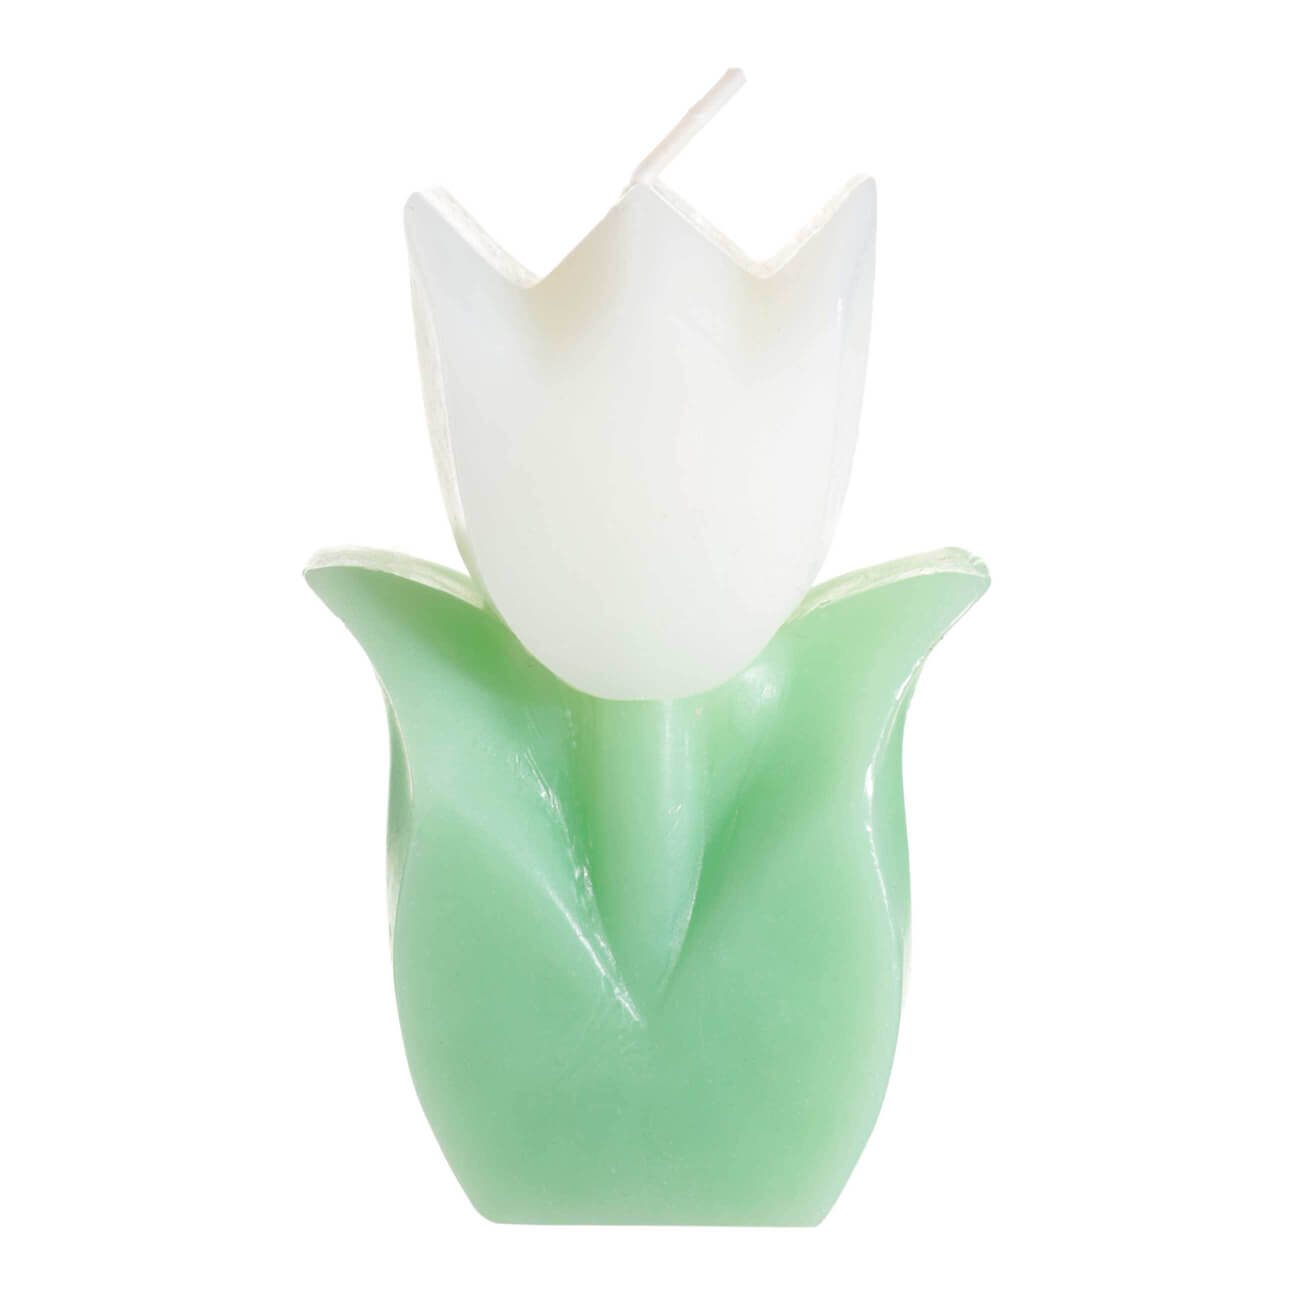 Свеча, 10 см, бело-зеленая, Тюльпан, Tulip garden свеча насыпная 100 г зеленая